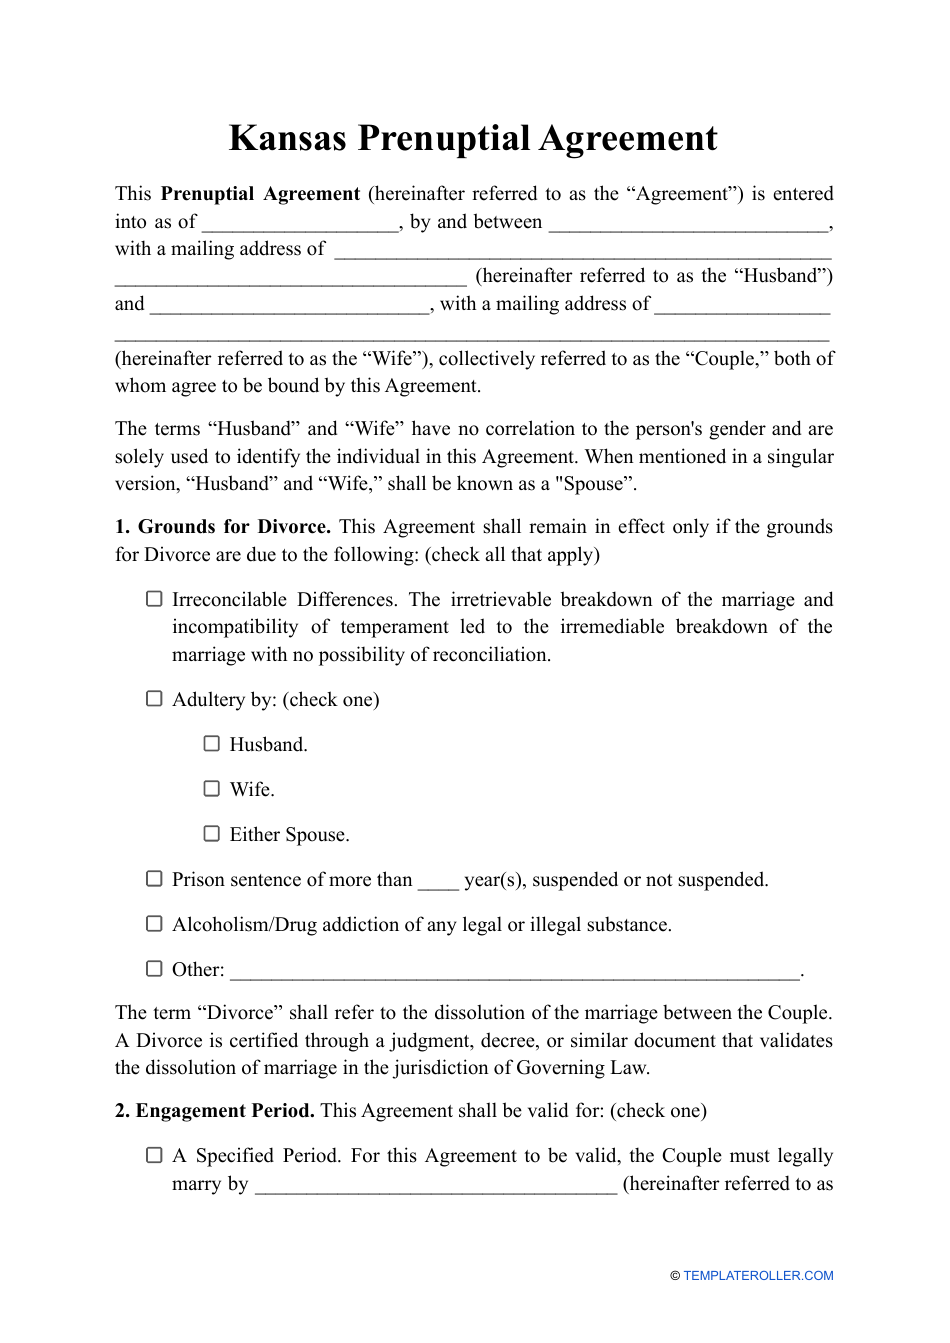 Prenuptial Agreement Template - Kansas, Page 1